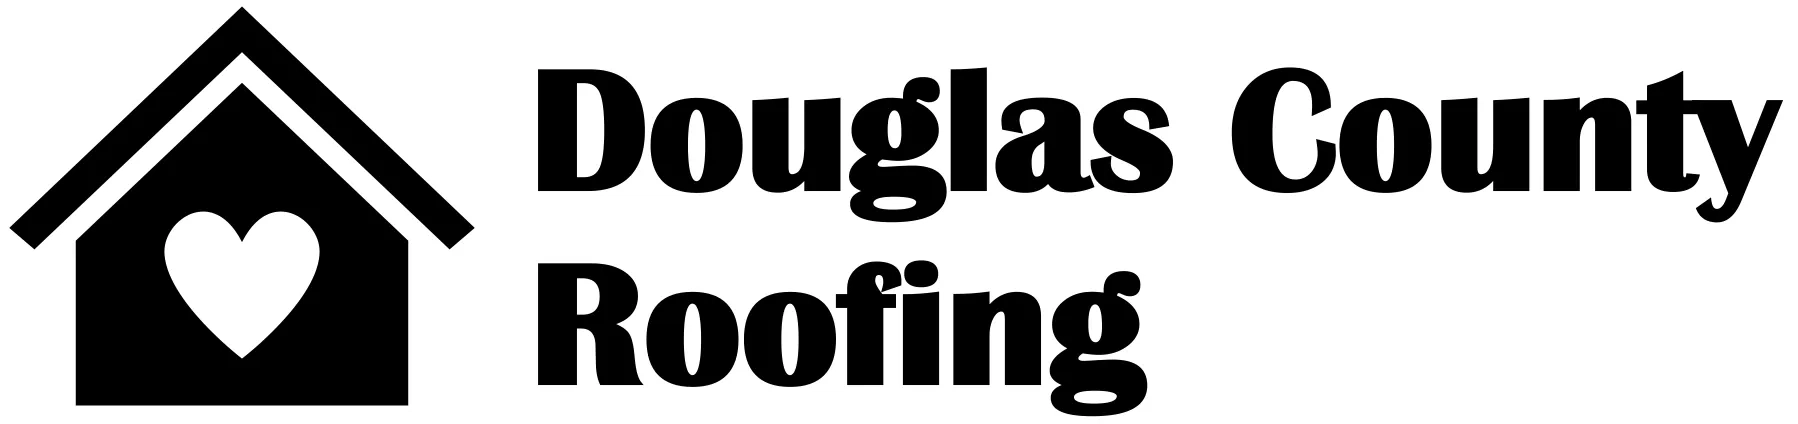 Douglas County Roofing Douglasville Ga Logo